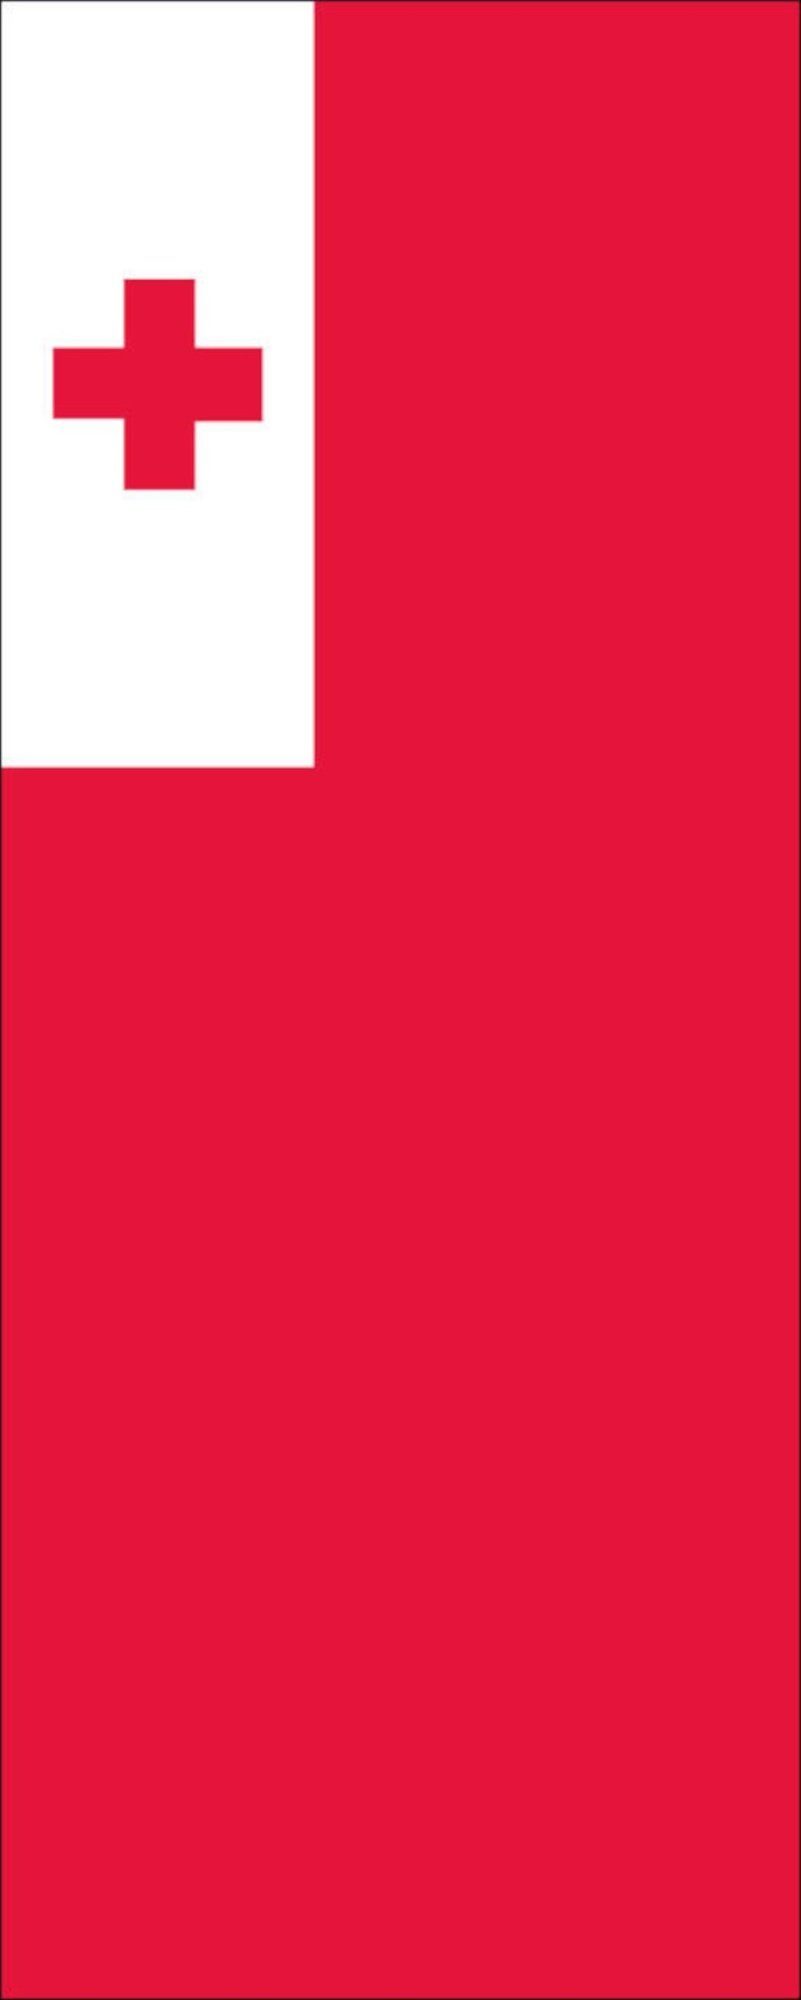 Flagge Hochformat g/m² Tonga Flagge 110 flaggenmeer